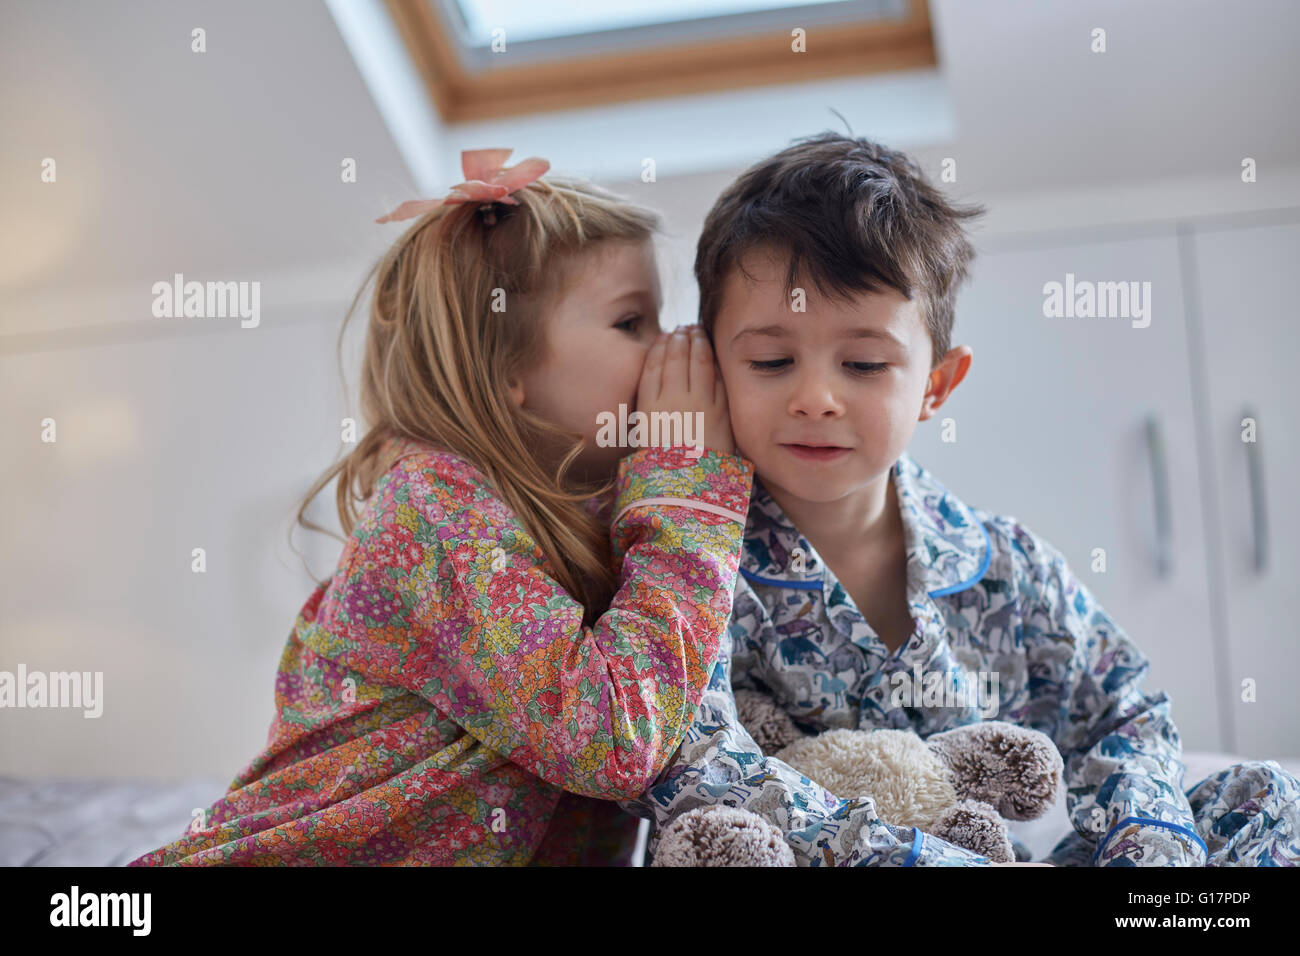 Girl whispering into boy's ear in loft room Stock Photo